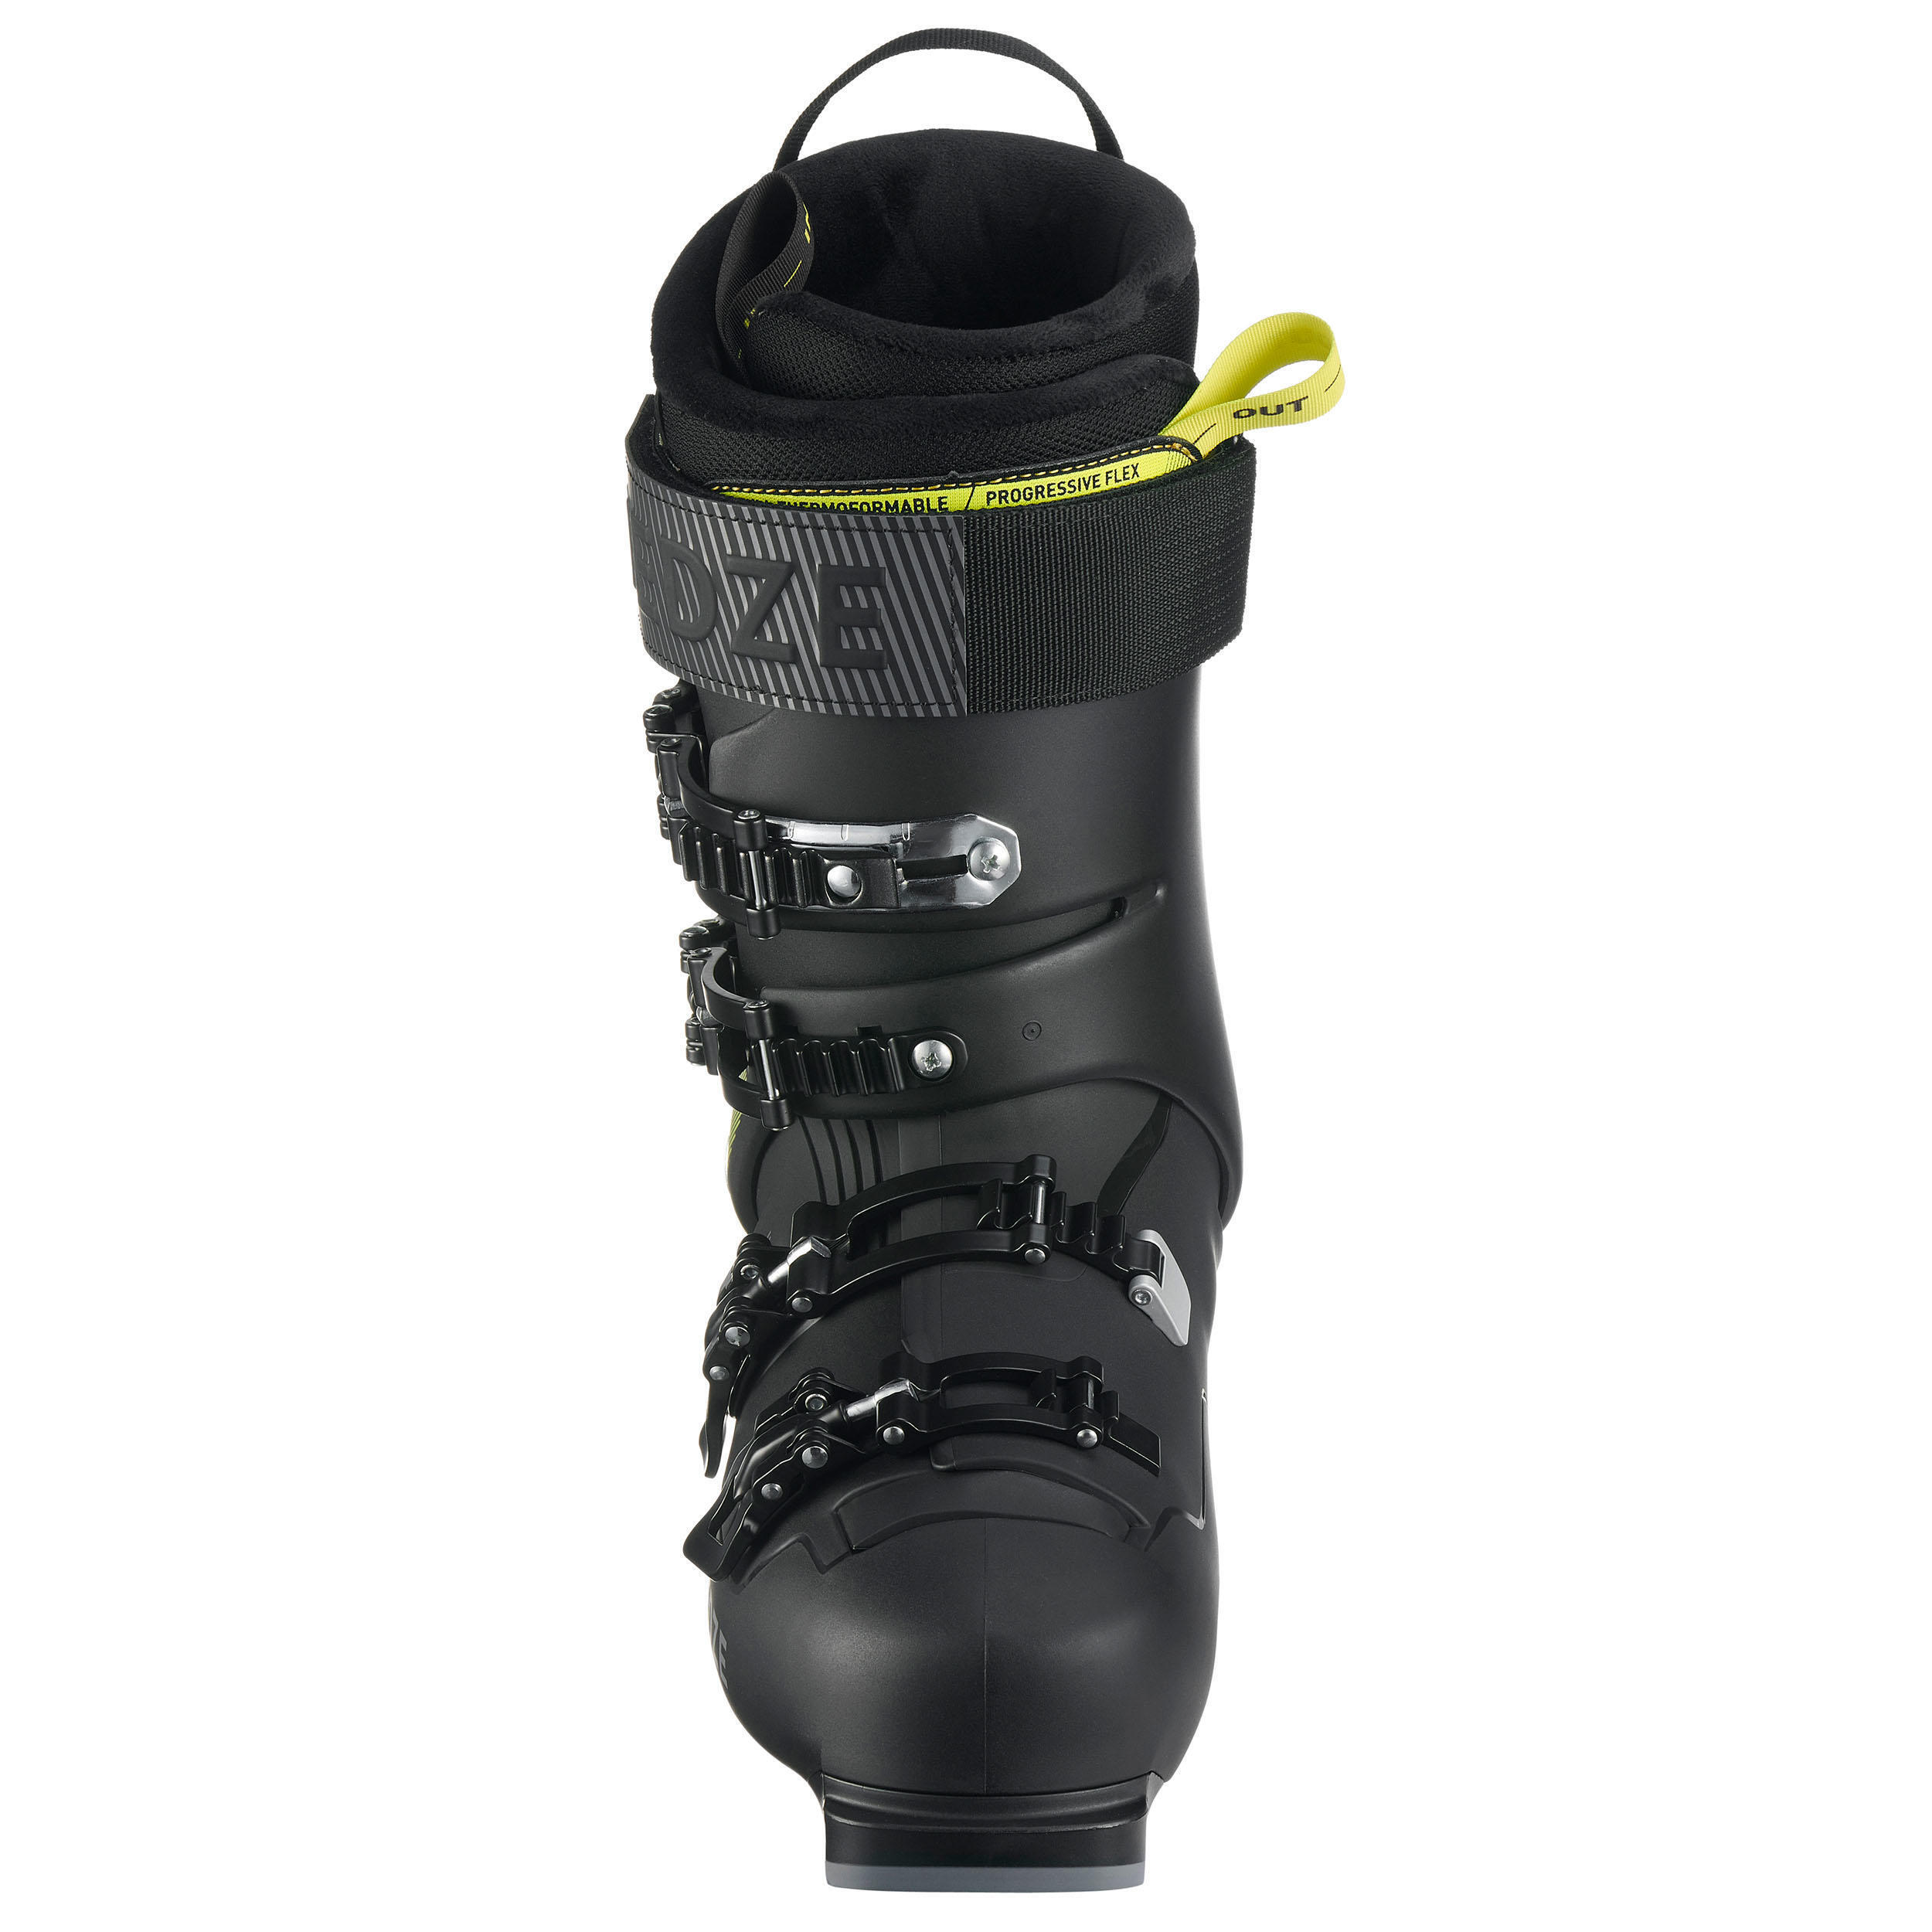 Refurbished Mens Downhill Ski Boots Fit Black Yellow - C Grade 7/7